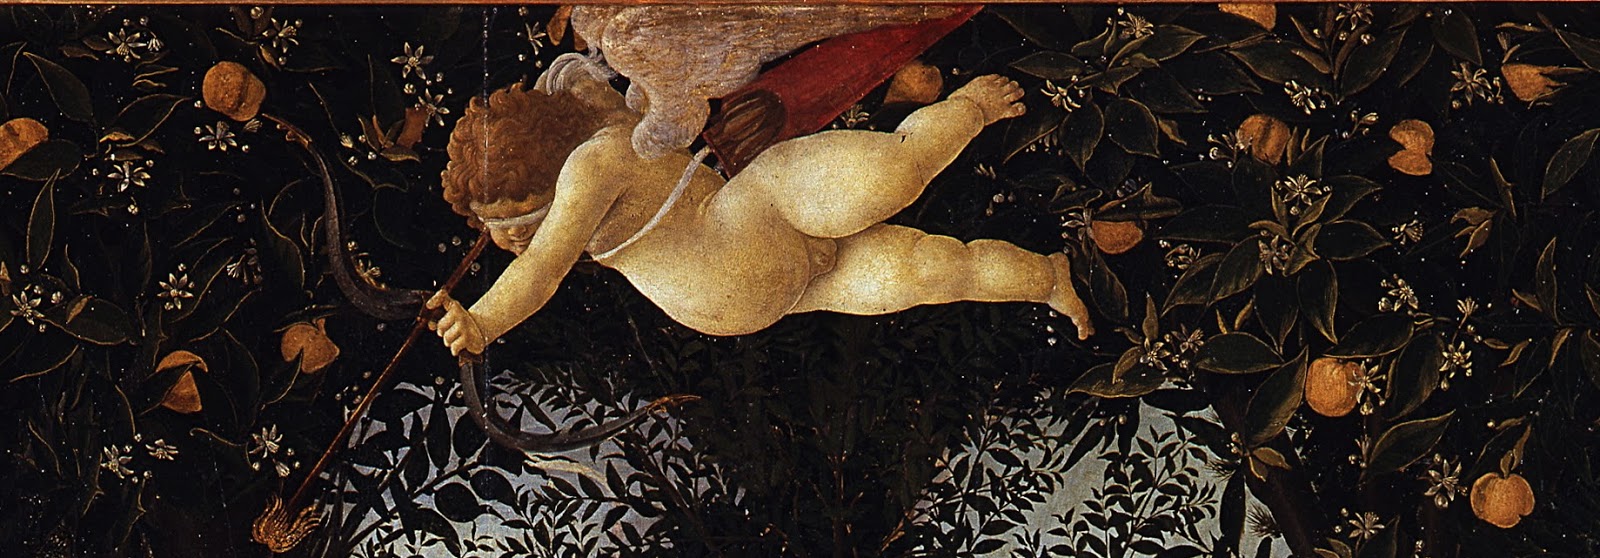 Grandes Iconos Universales XIV: La Primavera, Sandro Botticelli, 1478.